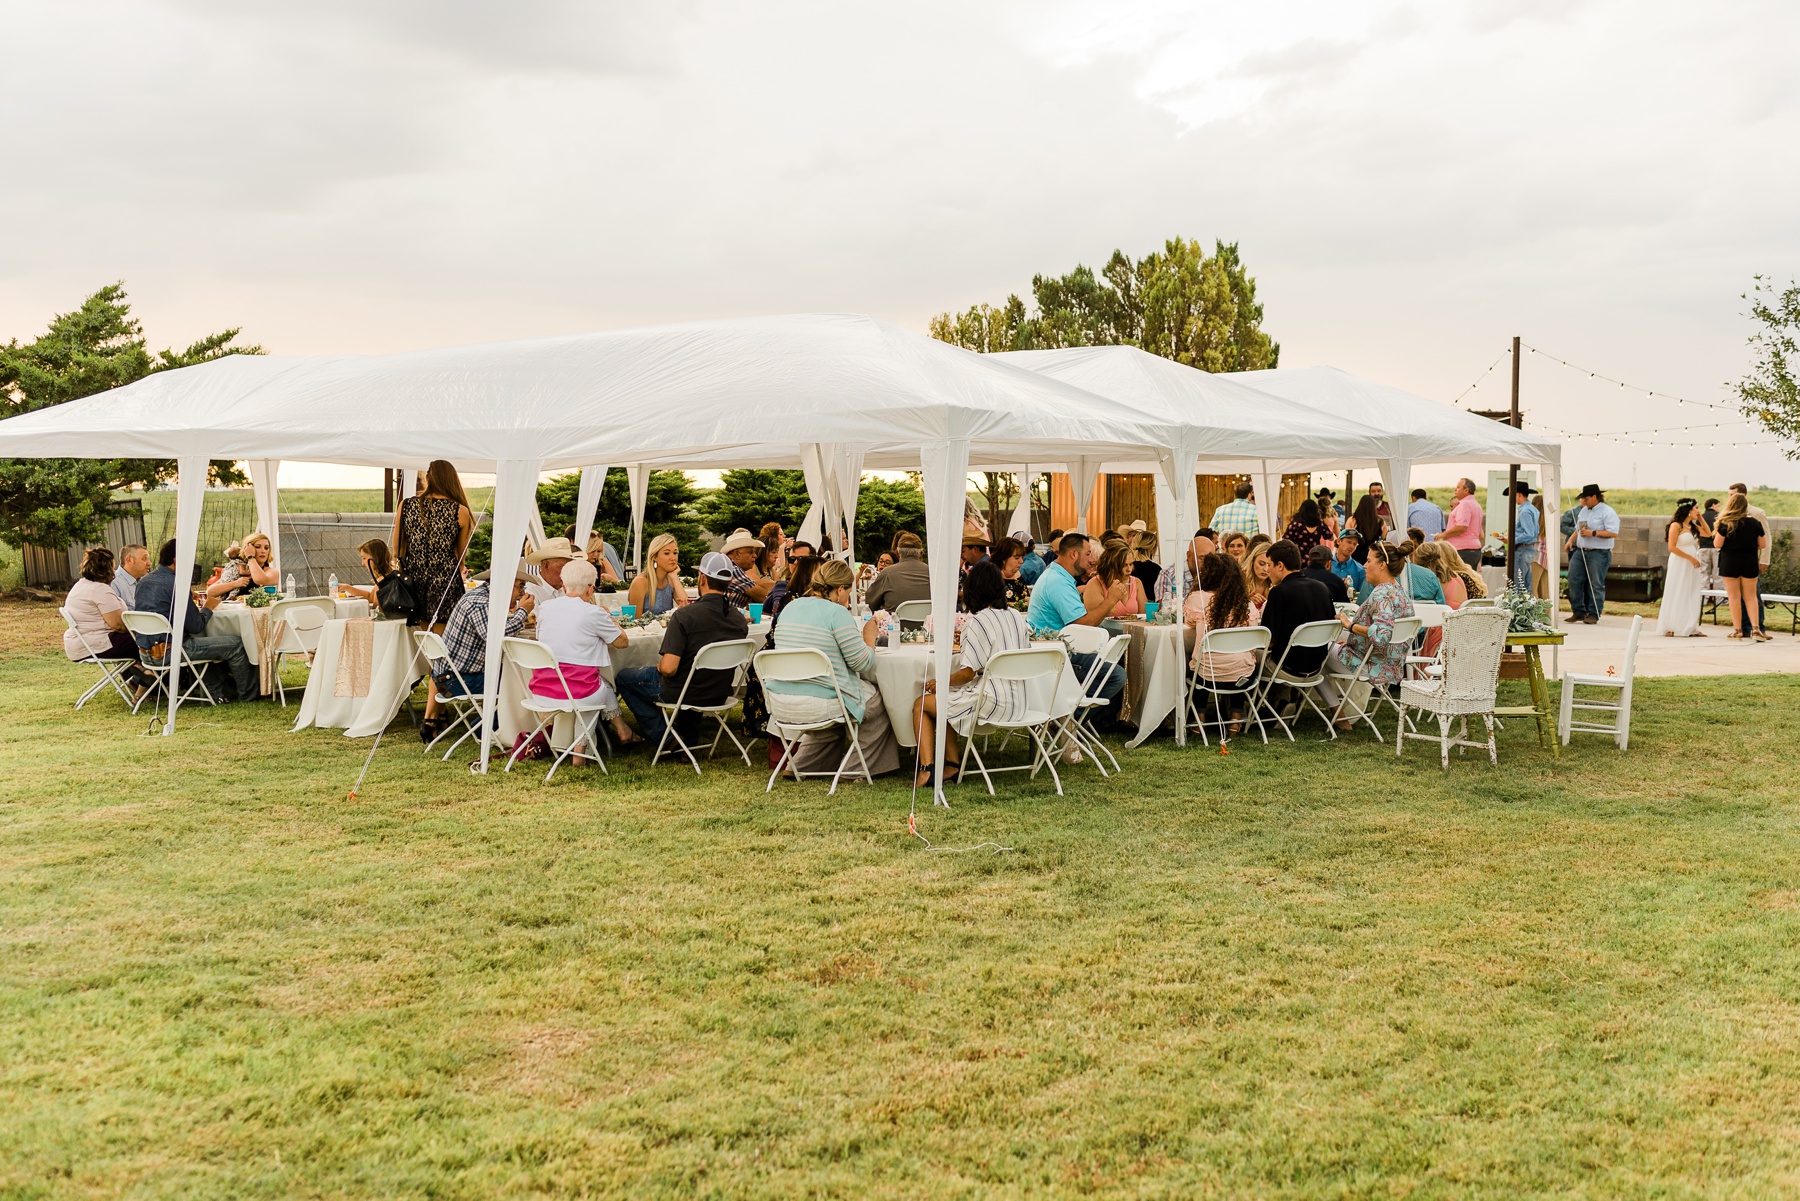 Backyard New Mexico Wedding Tent Reception